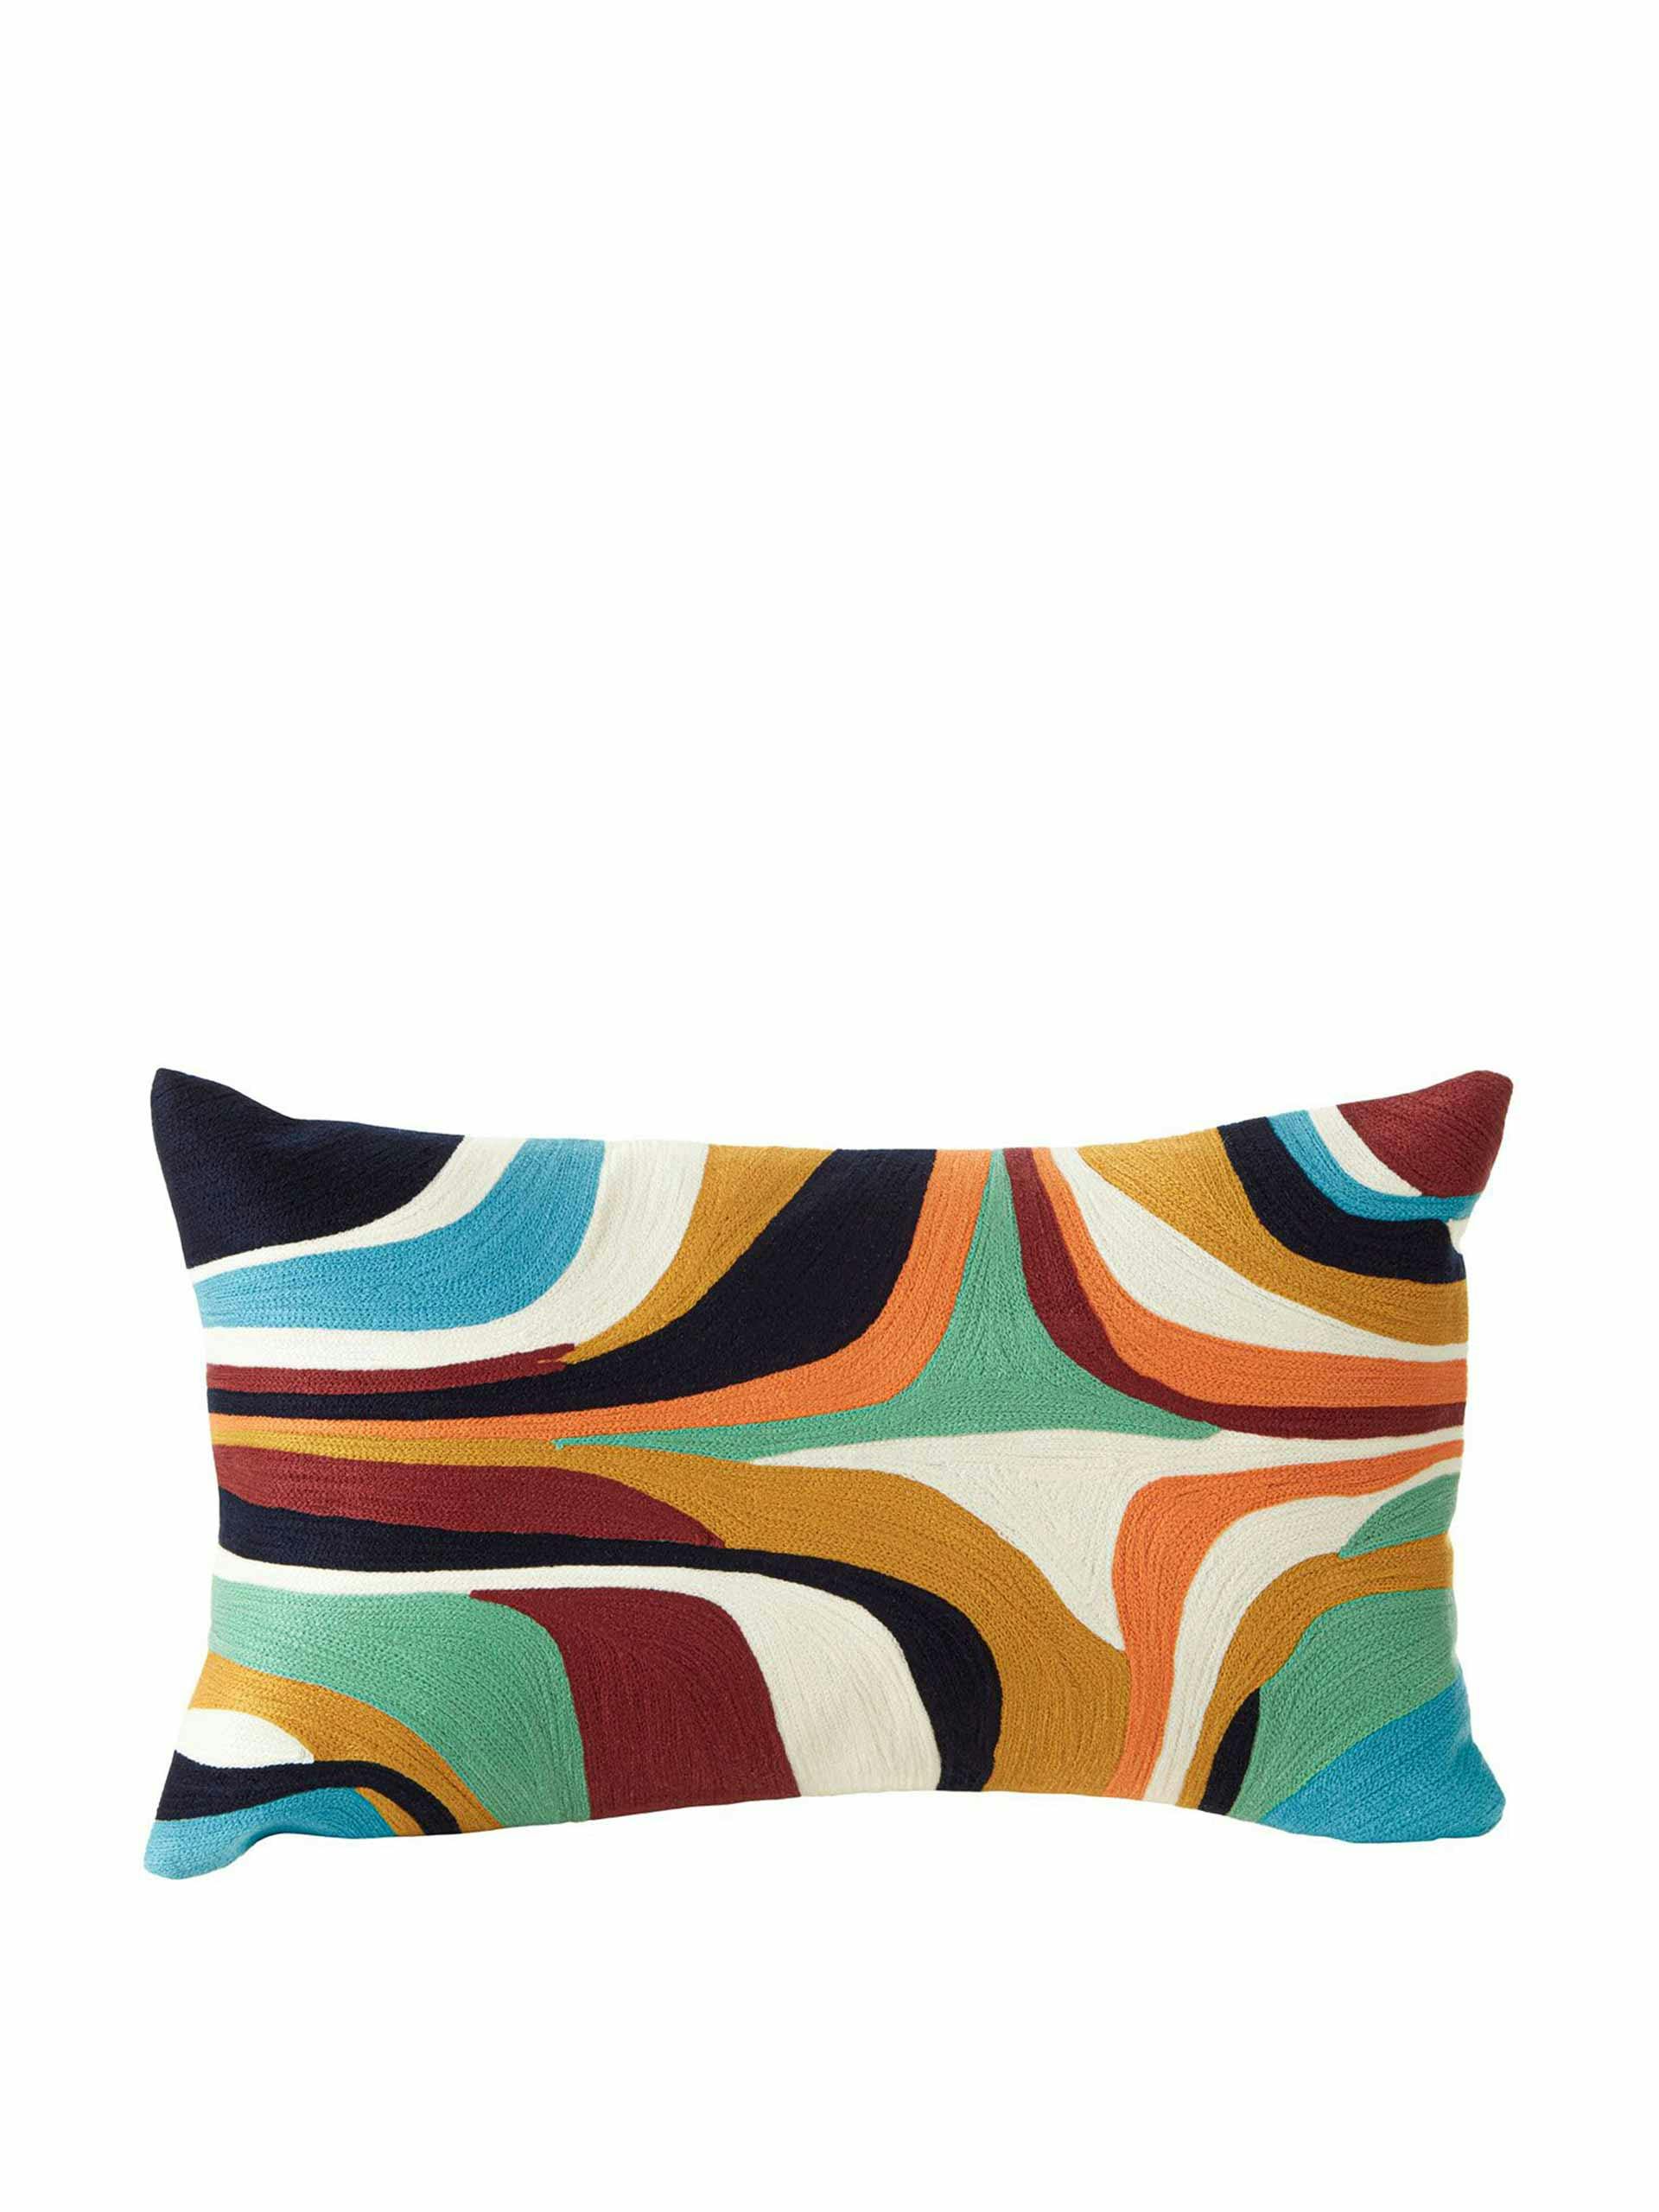 Colourful abstract design cushion